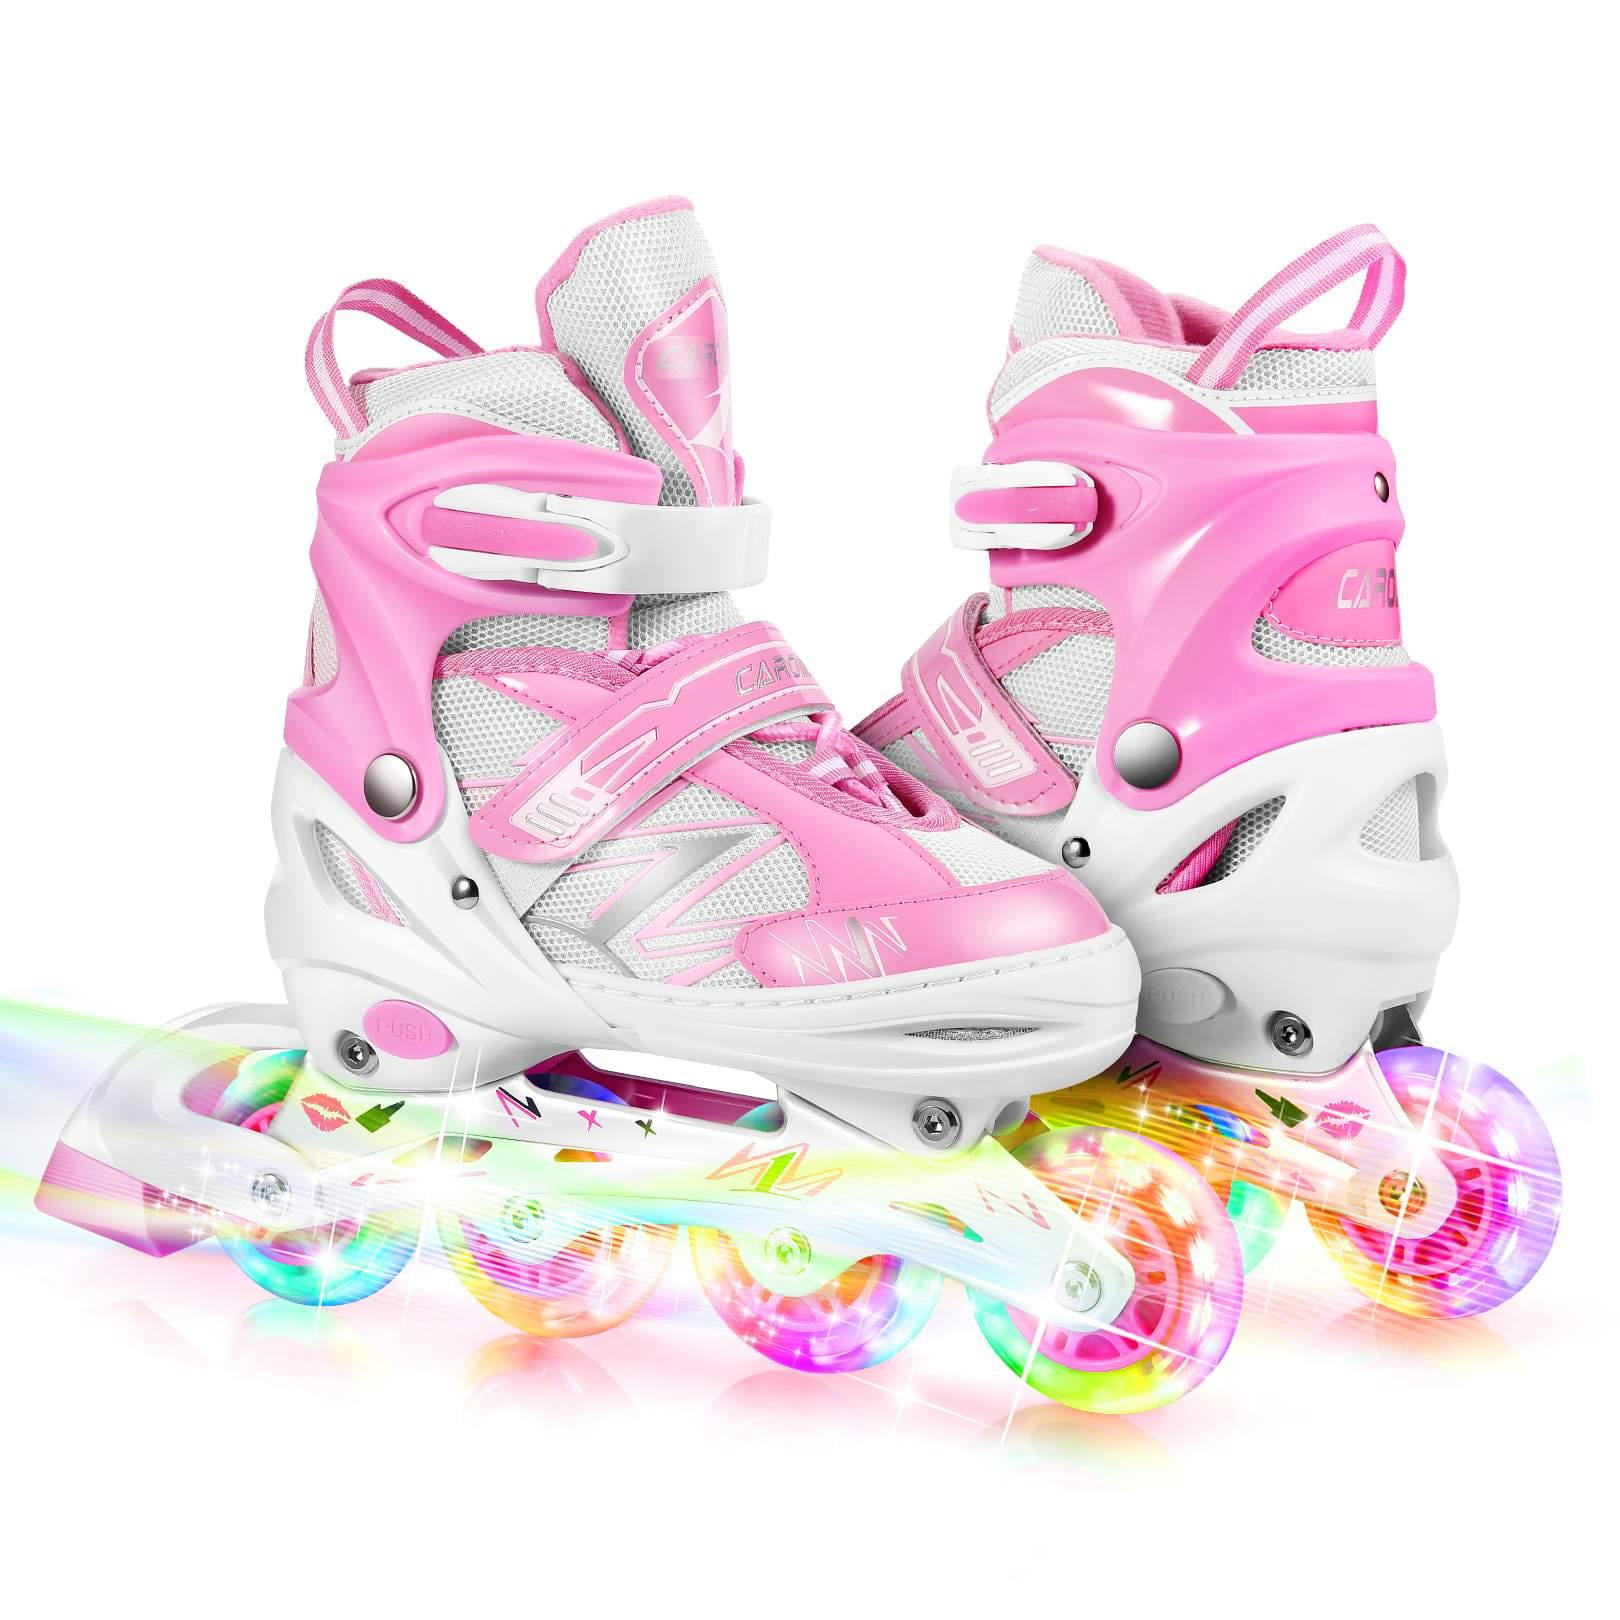 Adjustable Roller Skates Blades with Light up Wheels for Girls Boys Kids Youth Adult Caroma Inline Skates for Women Men 